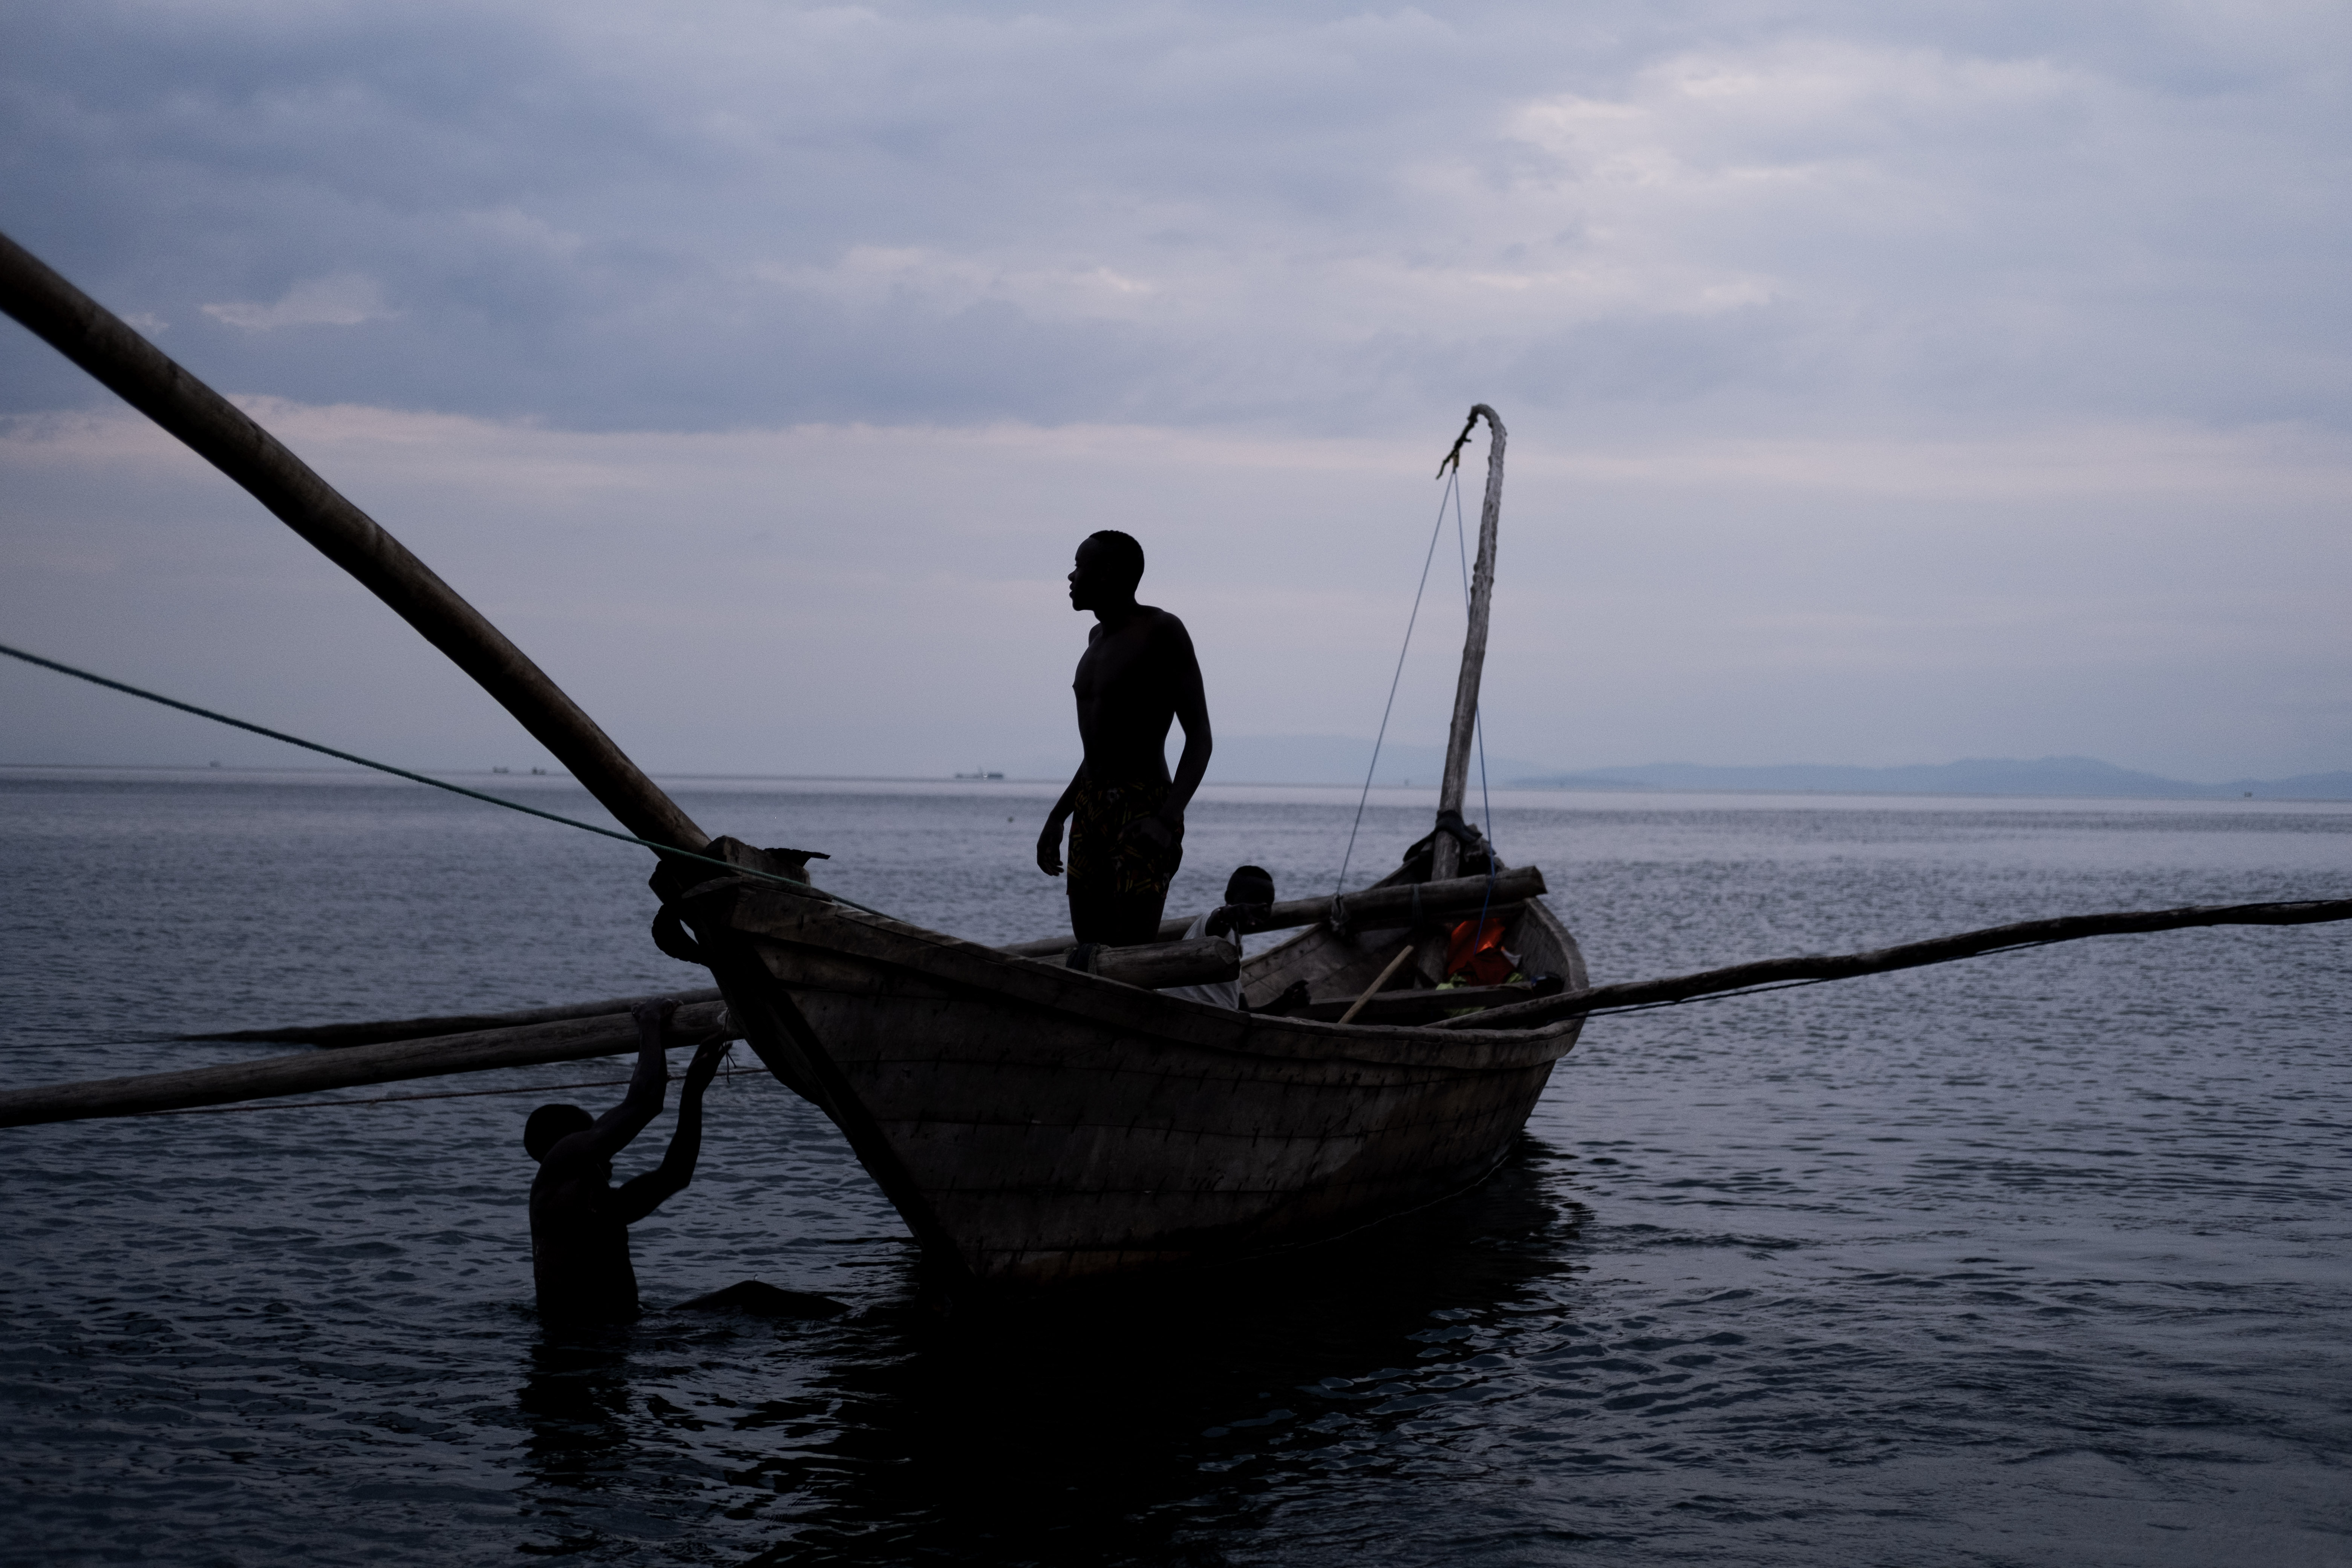 Rwandan fisherman in boat with colleague in the water